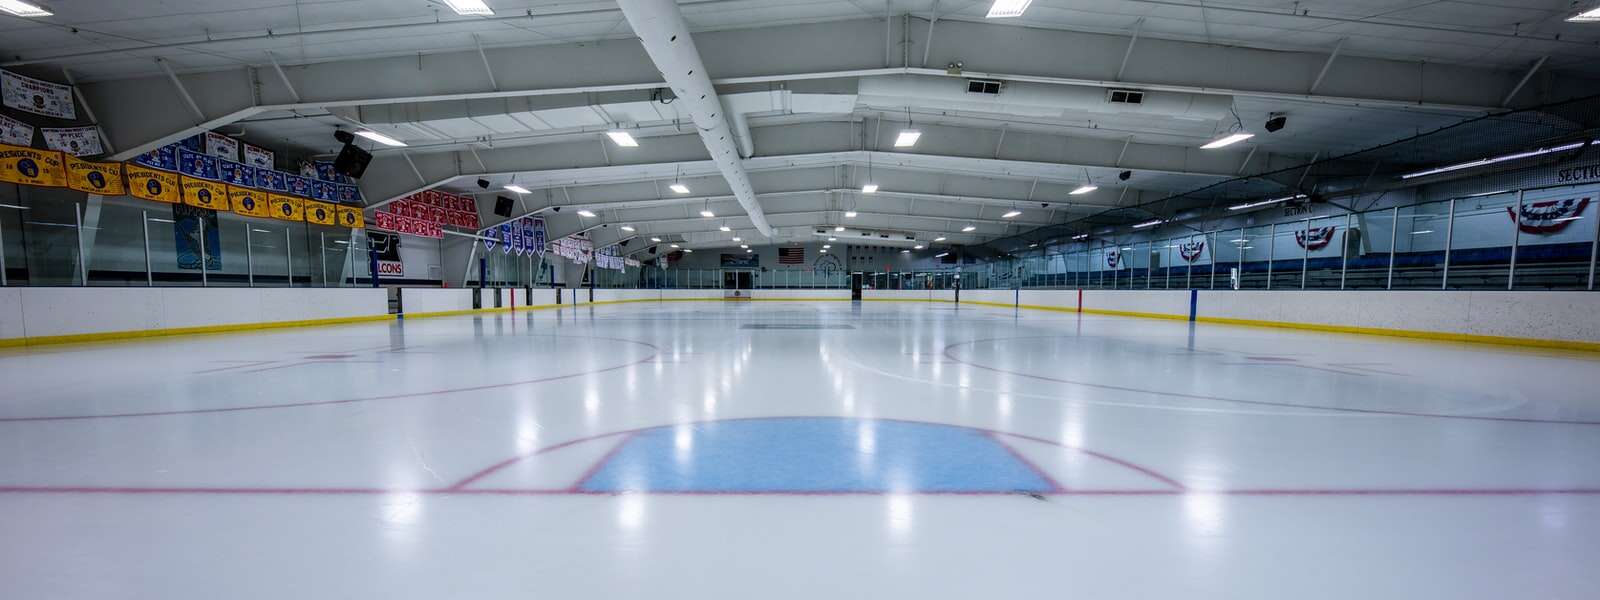 An empty indoor ice hockey rink